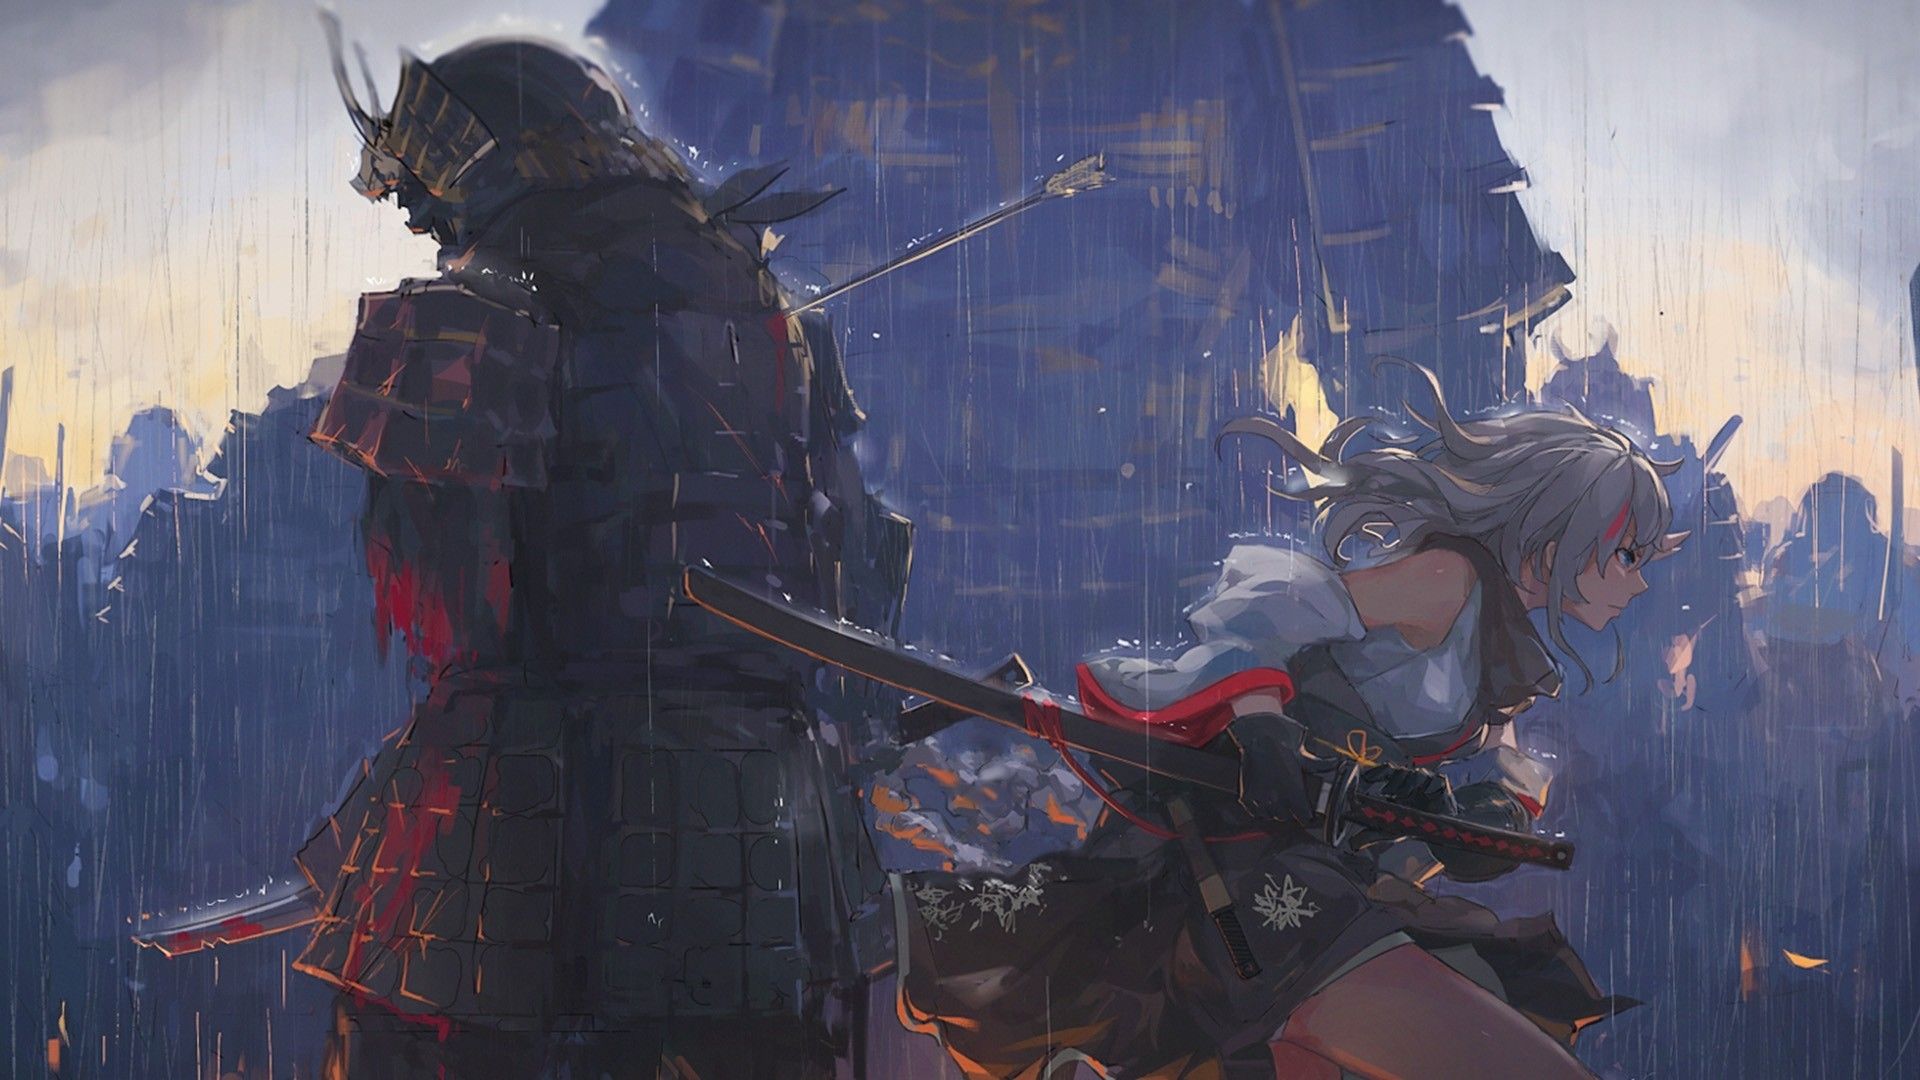 Download 1920x1080 Anime Girl, Samurai, Battle, Sword, Raining, Artwork Wallpaper for Widescreen